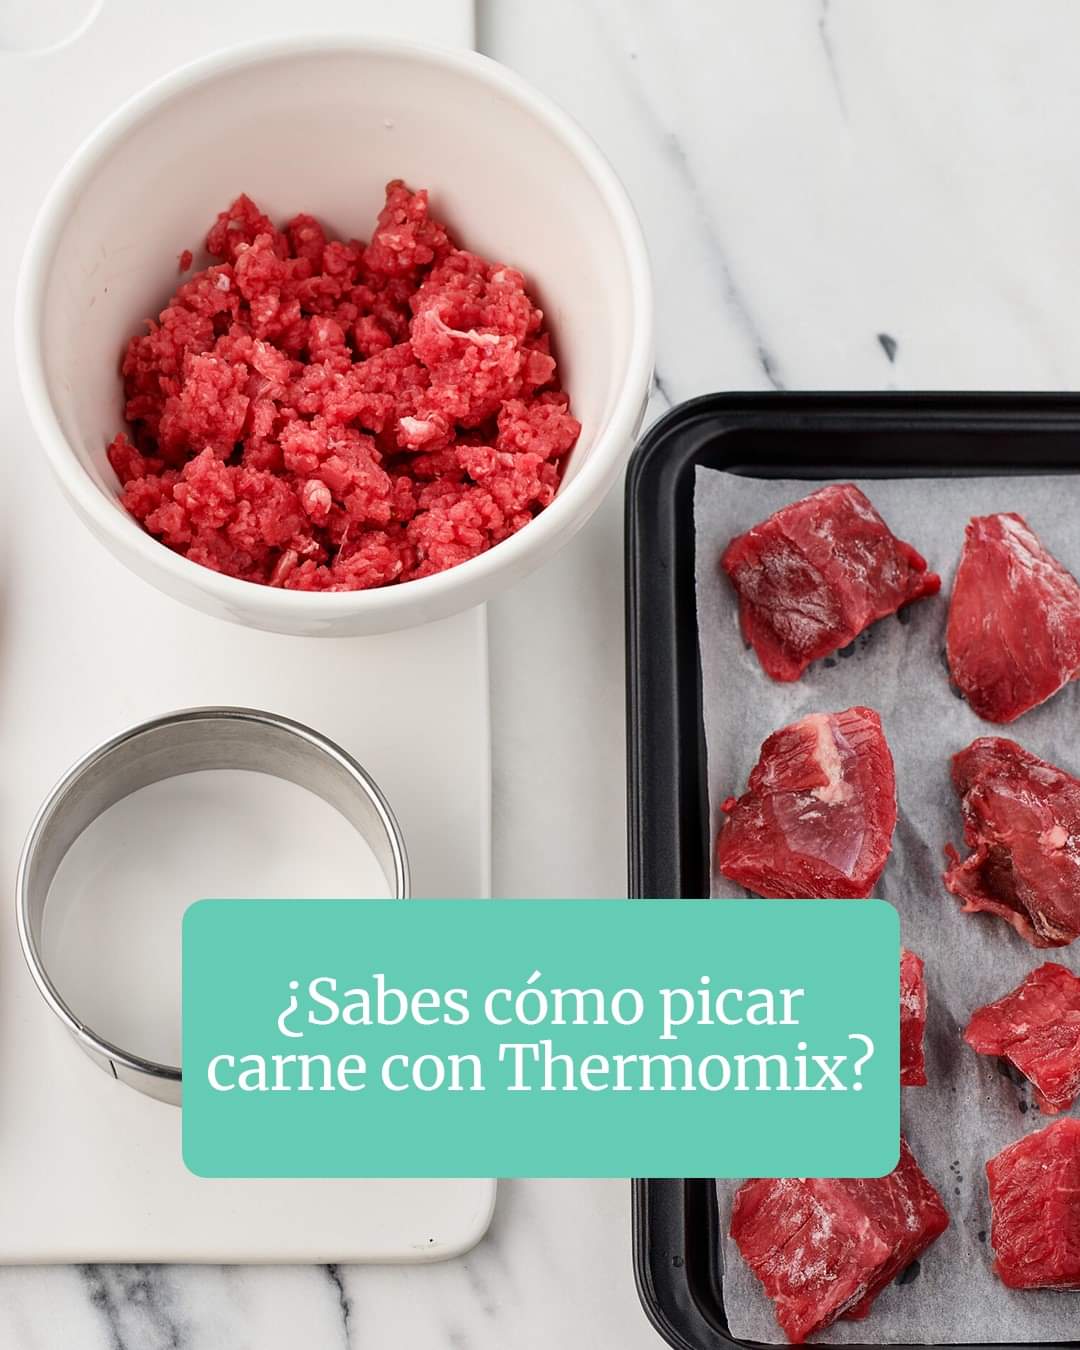 ¿Cómo picar carne? - Técnicas básicas - Blog de MARTA GARCIA GODED de Thermomix® Zaragoza